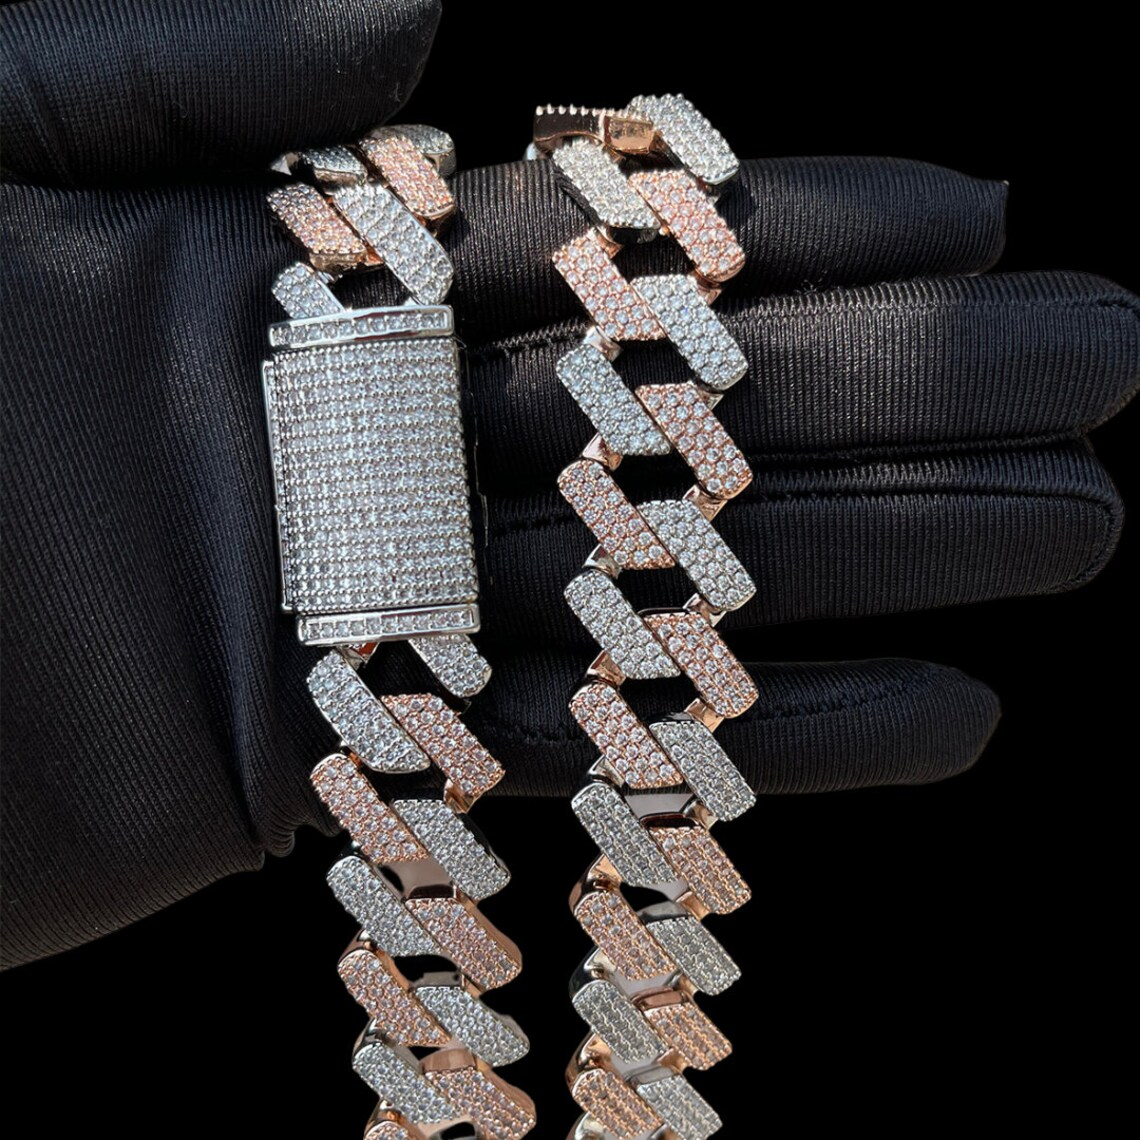 20MM PREMIUM RHOMBUS DIAMOND STRAIGHT EDGE CUBAN LINK CHAIN NECKLACE - TWO TONE